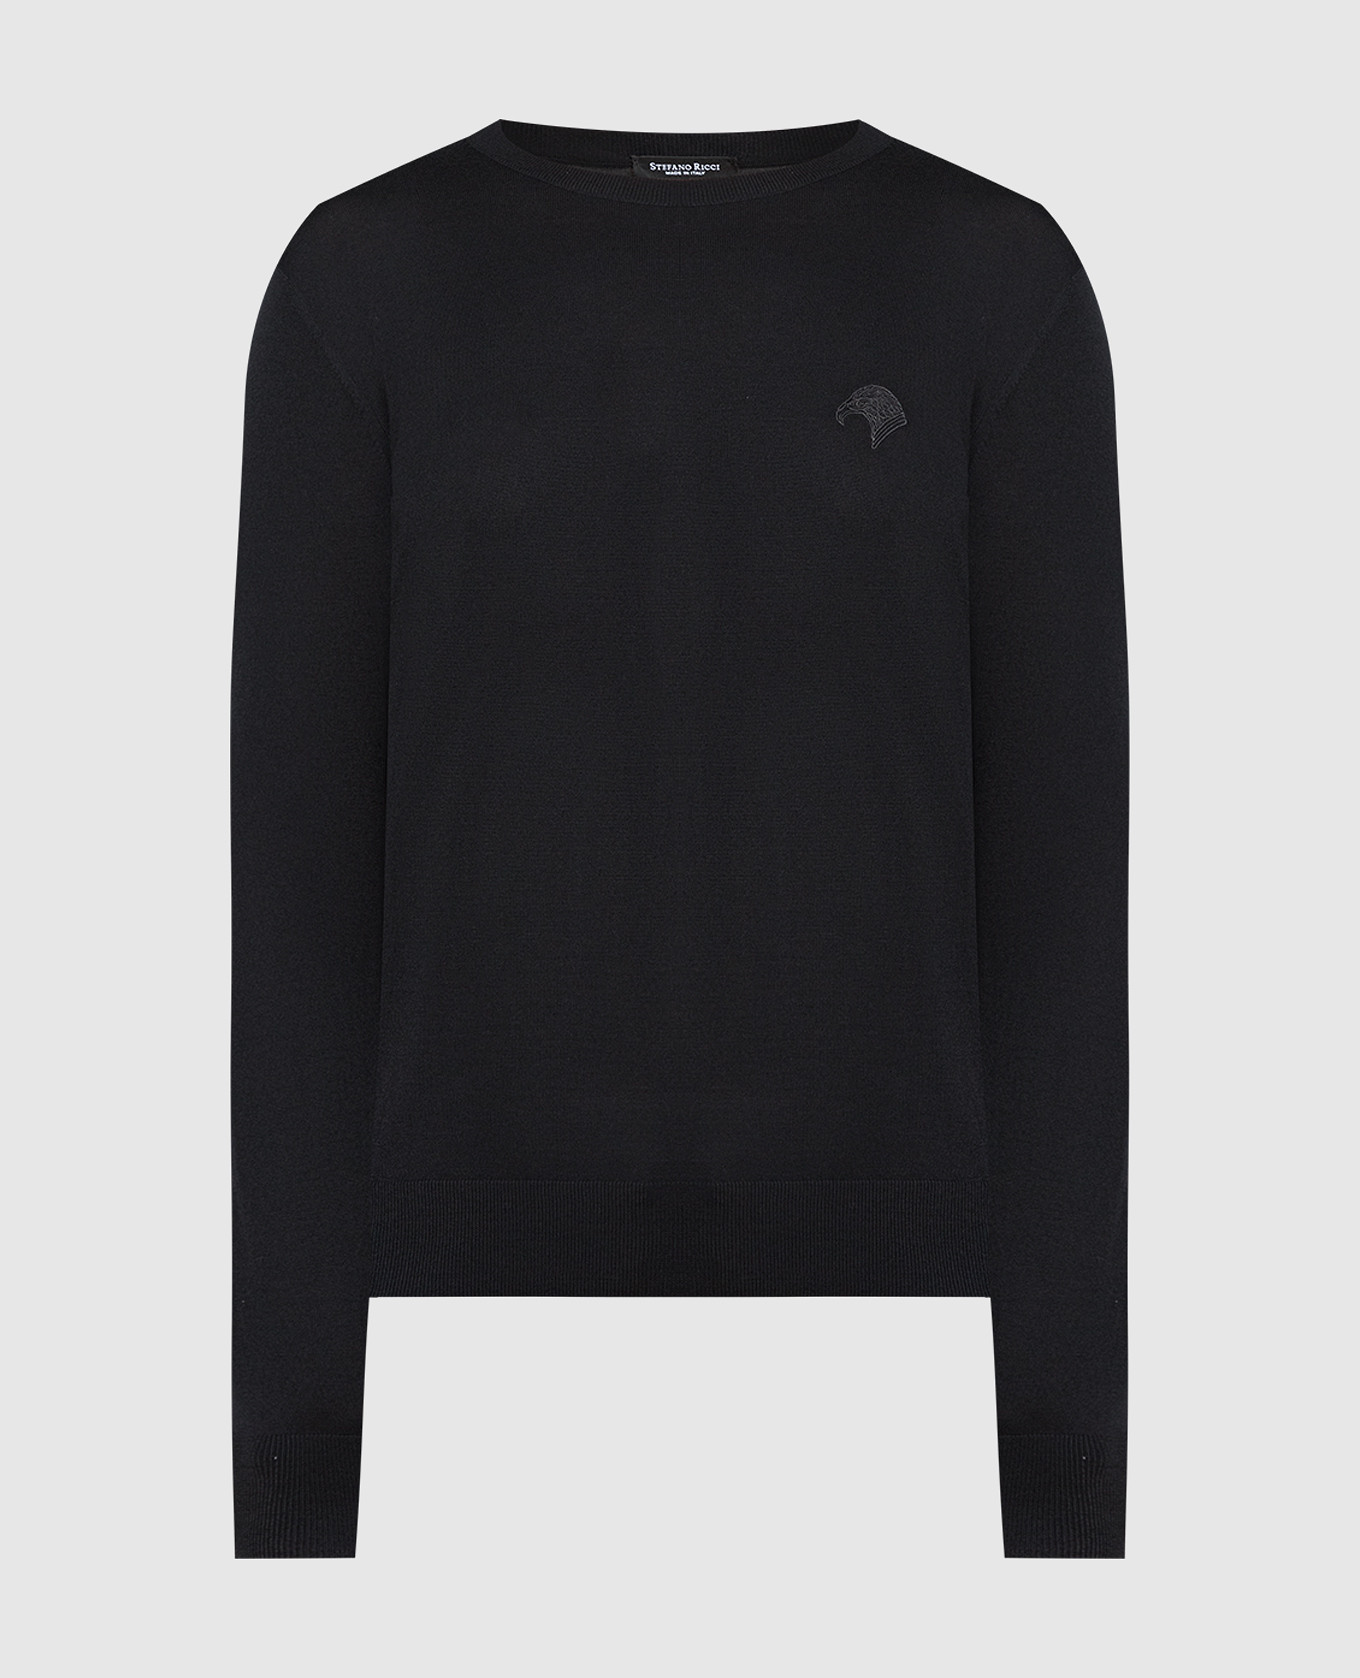 Black wool jumper with logo